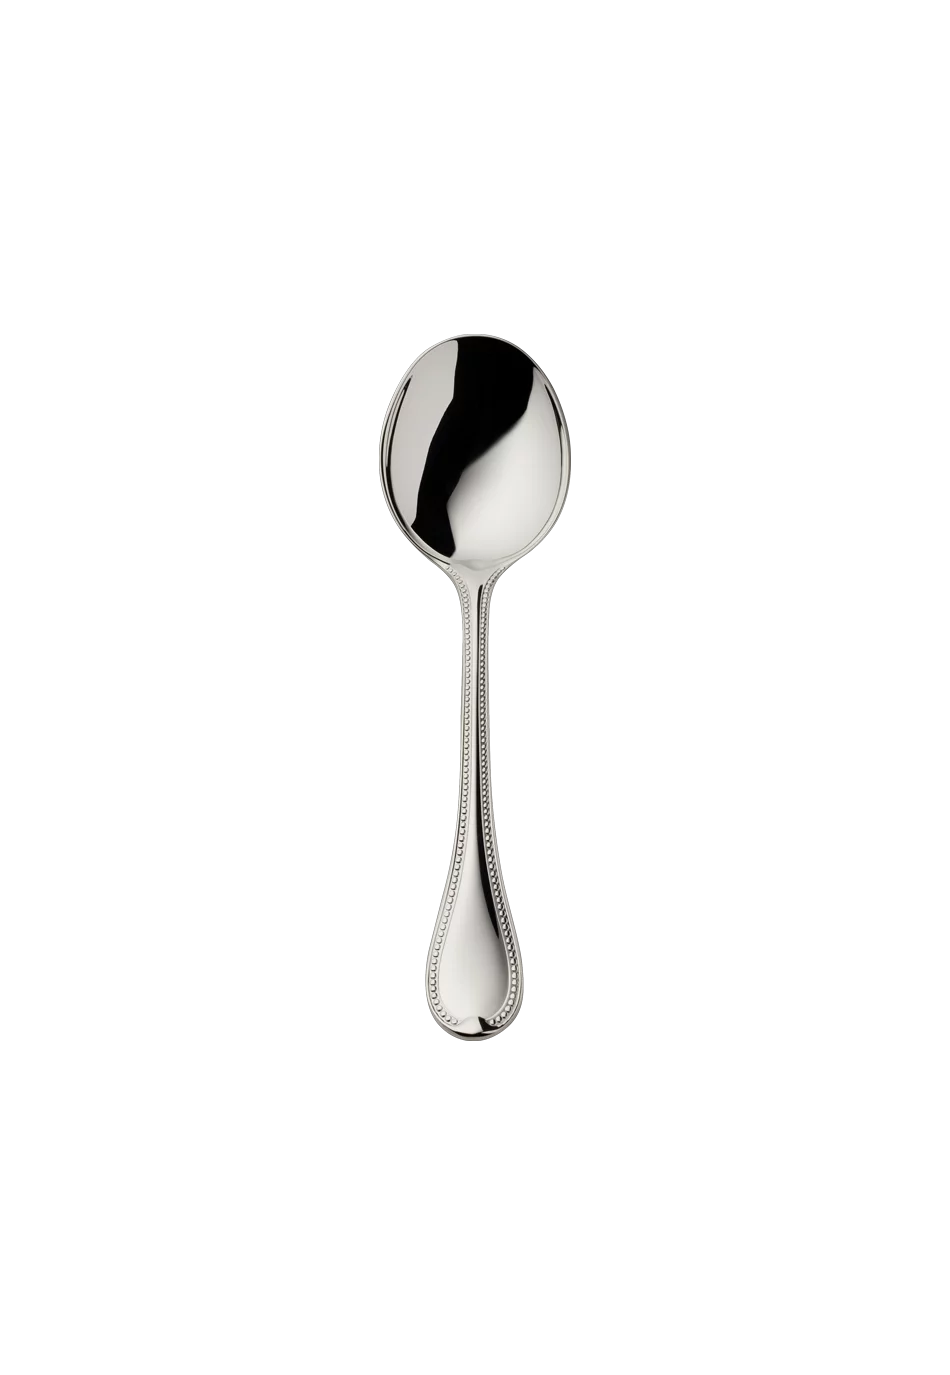 Französisch-Perl Cream Spoon (Broth Spoon) (150g massive silverplated)